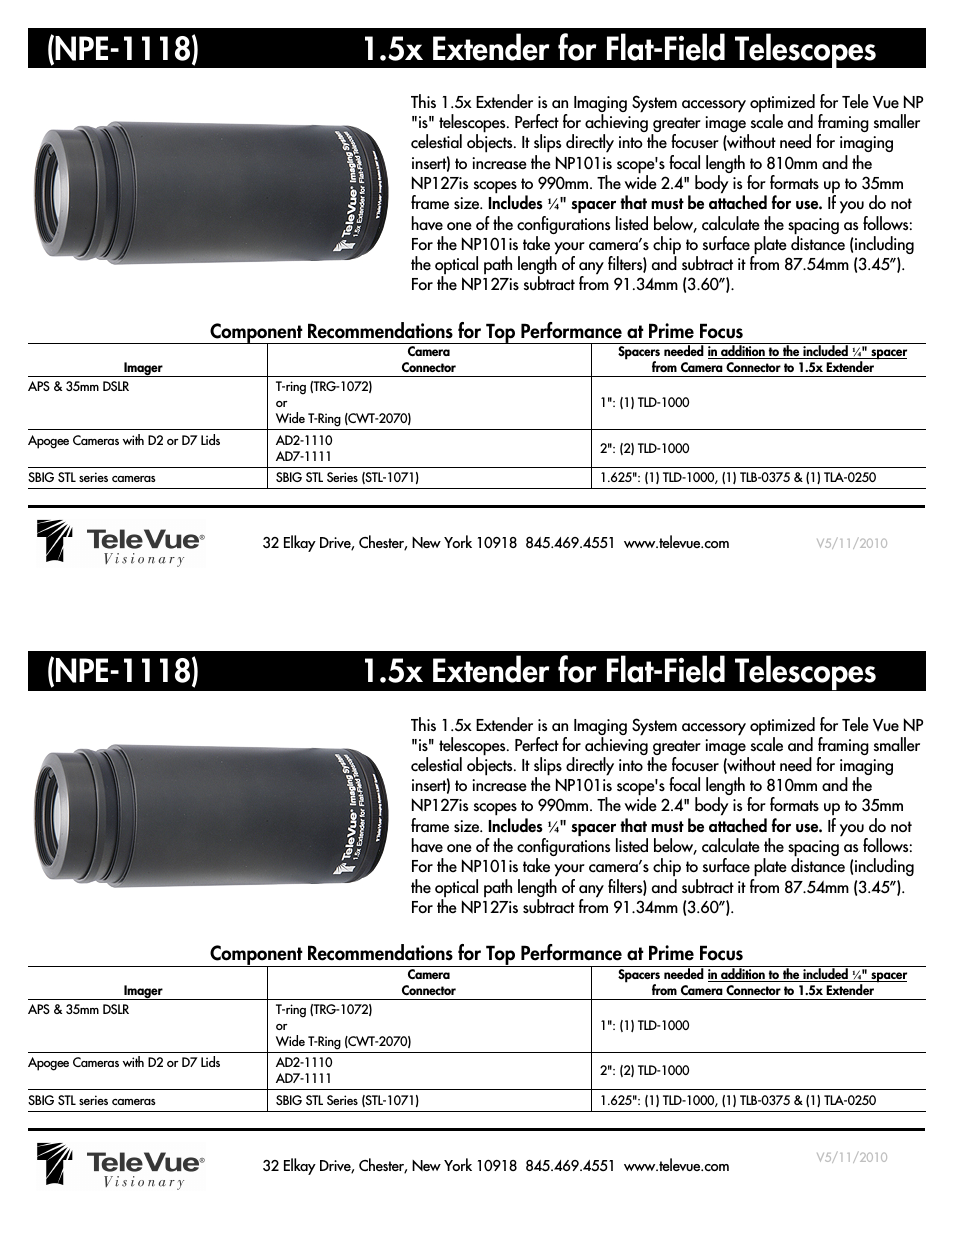 1.5x Extender for Flat-Field Telescopes (NPE-1118)